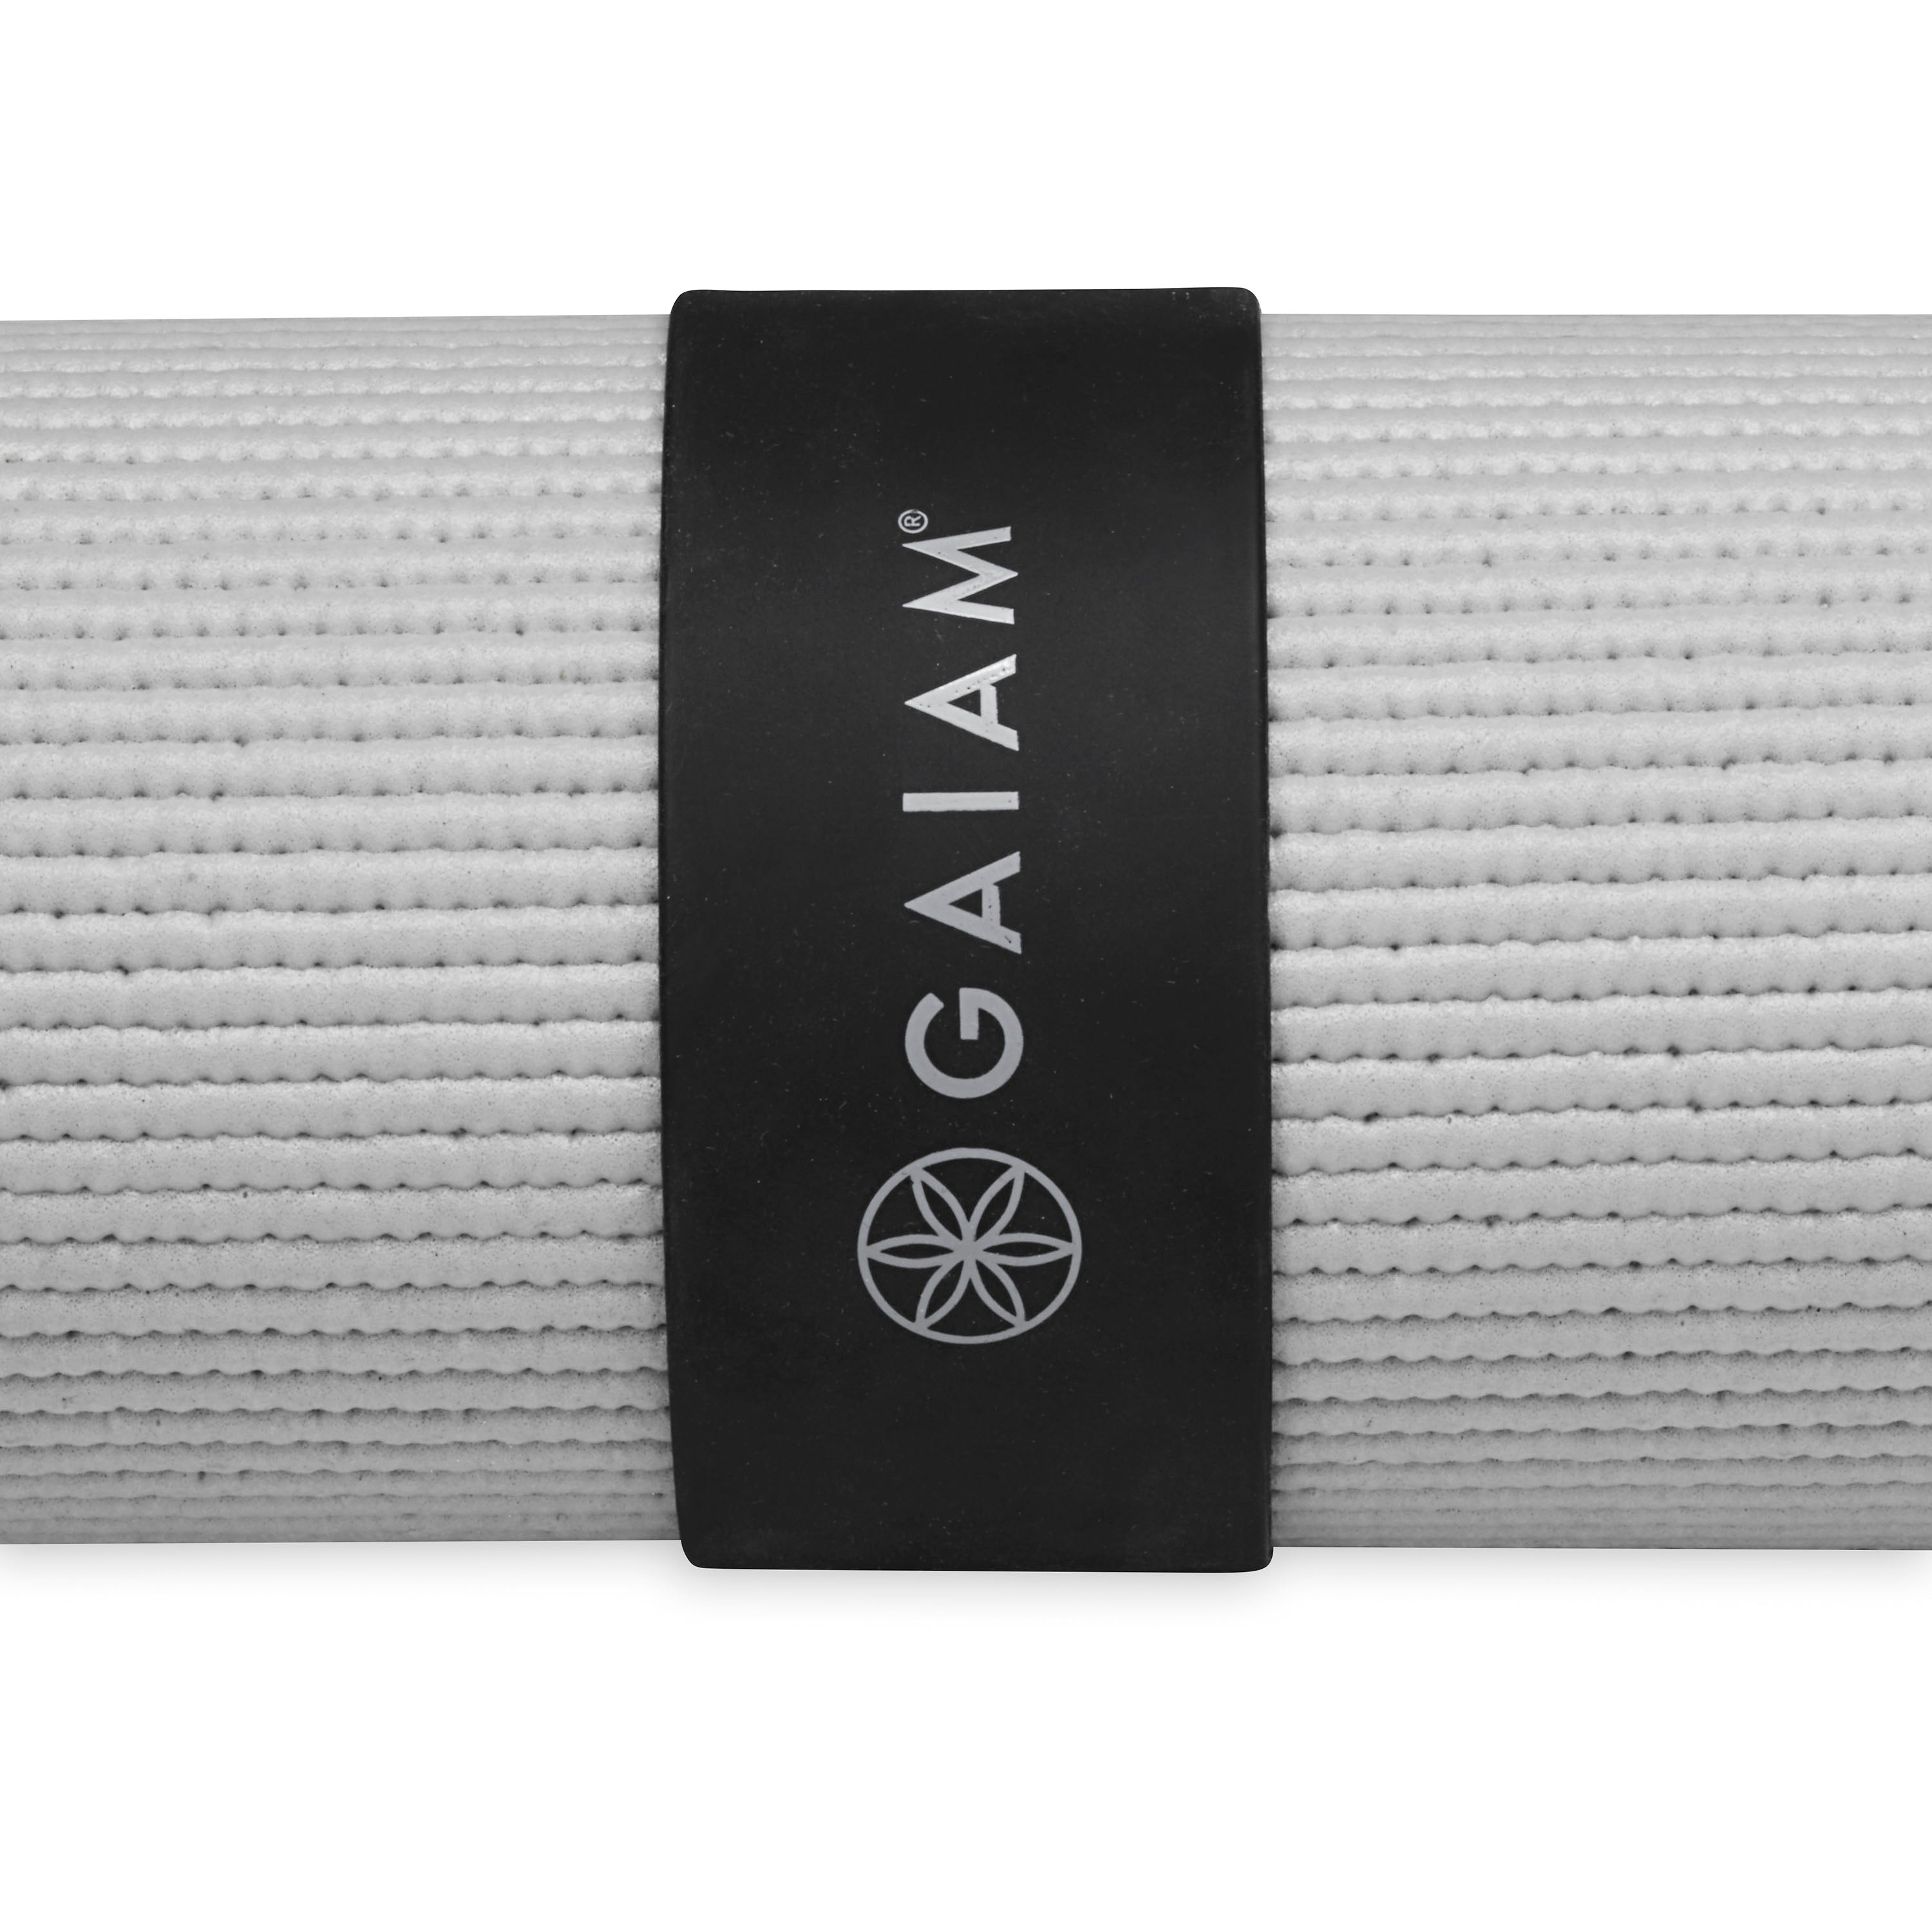 Yoga Mat Slap Band around mat